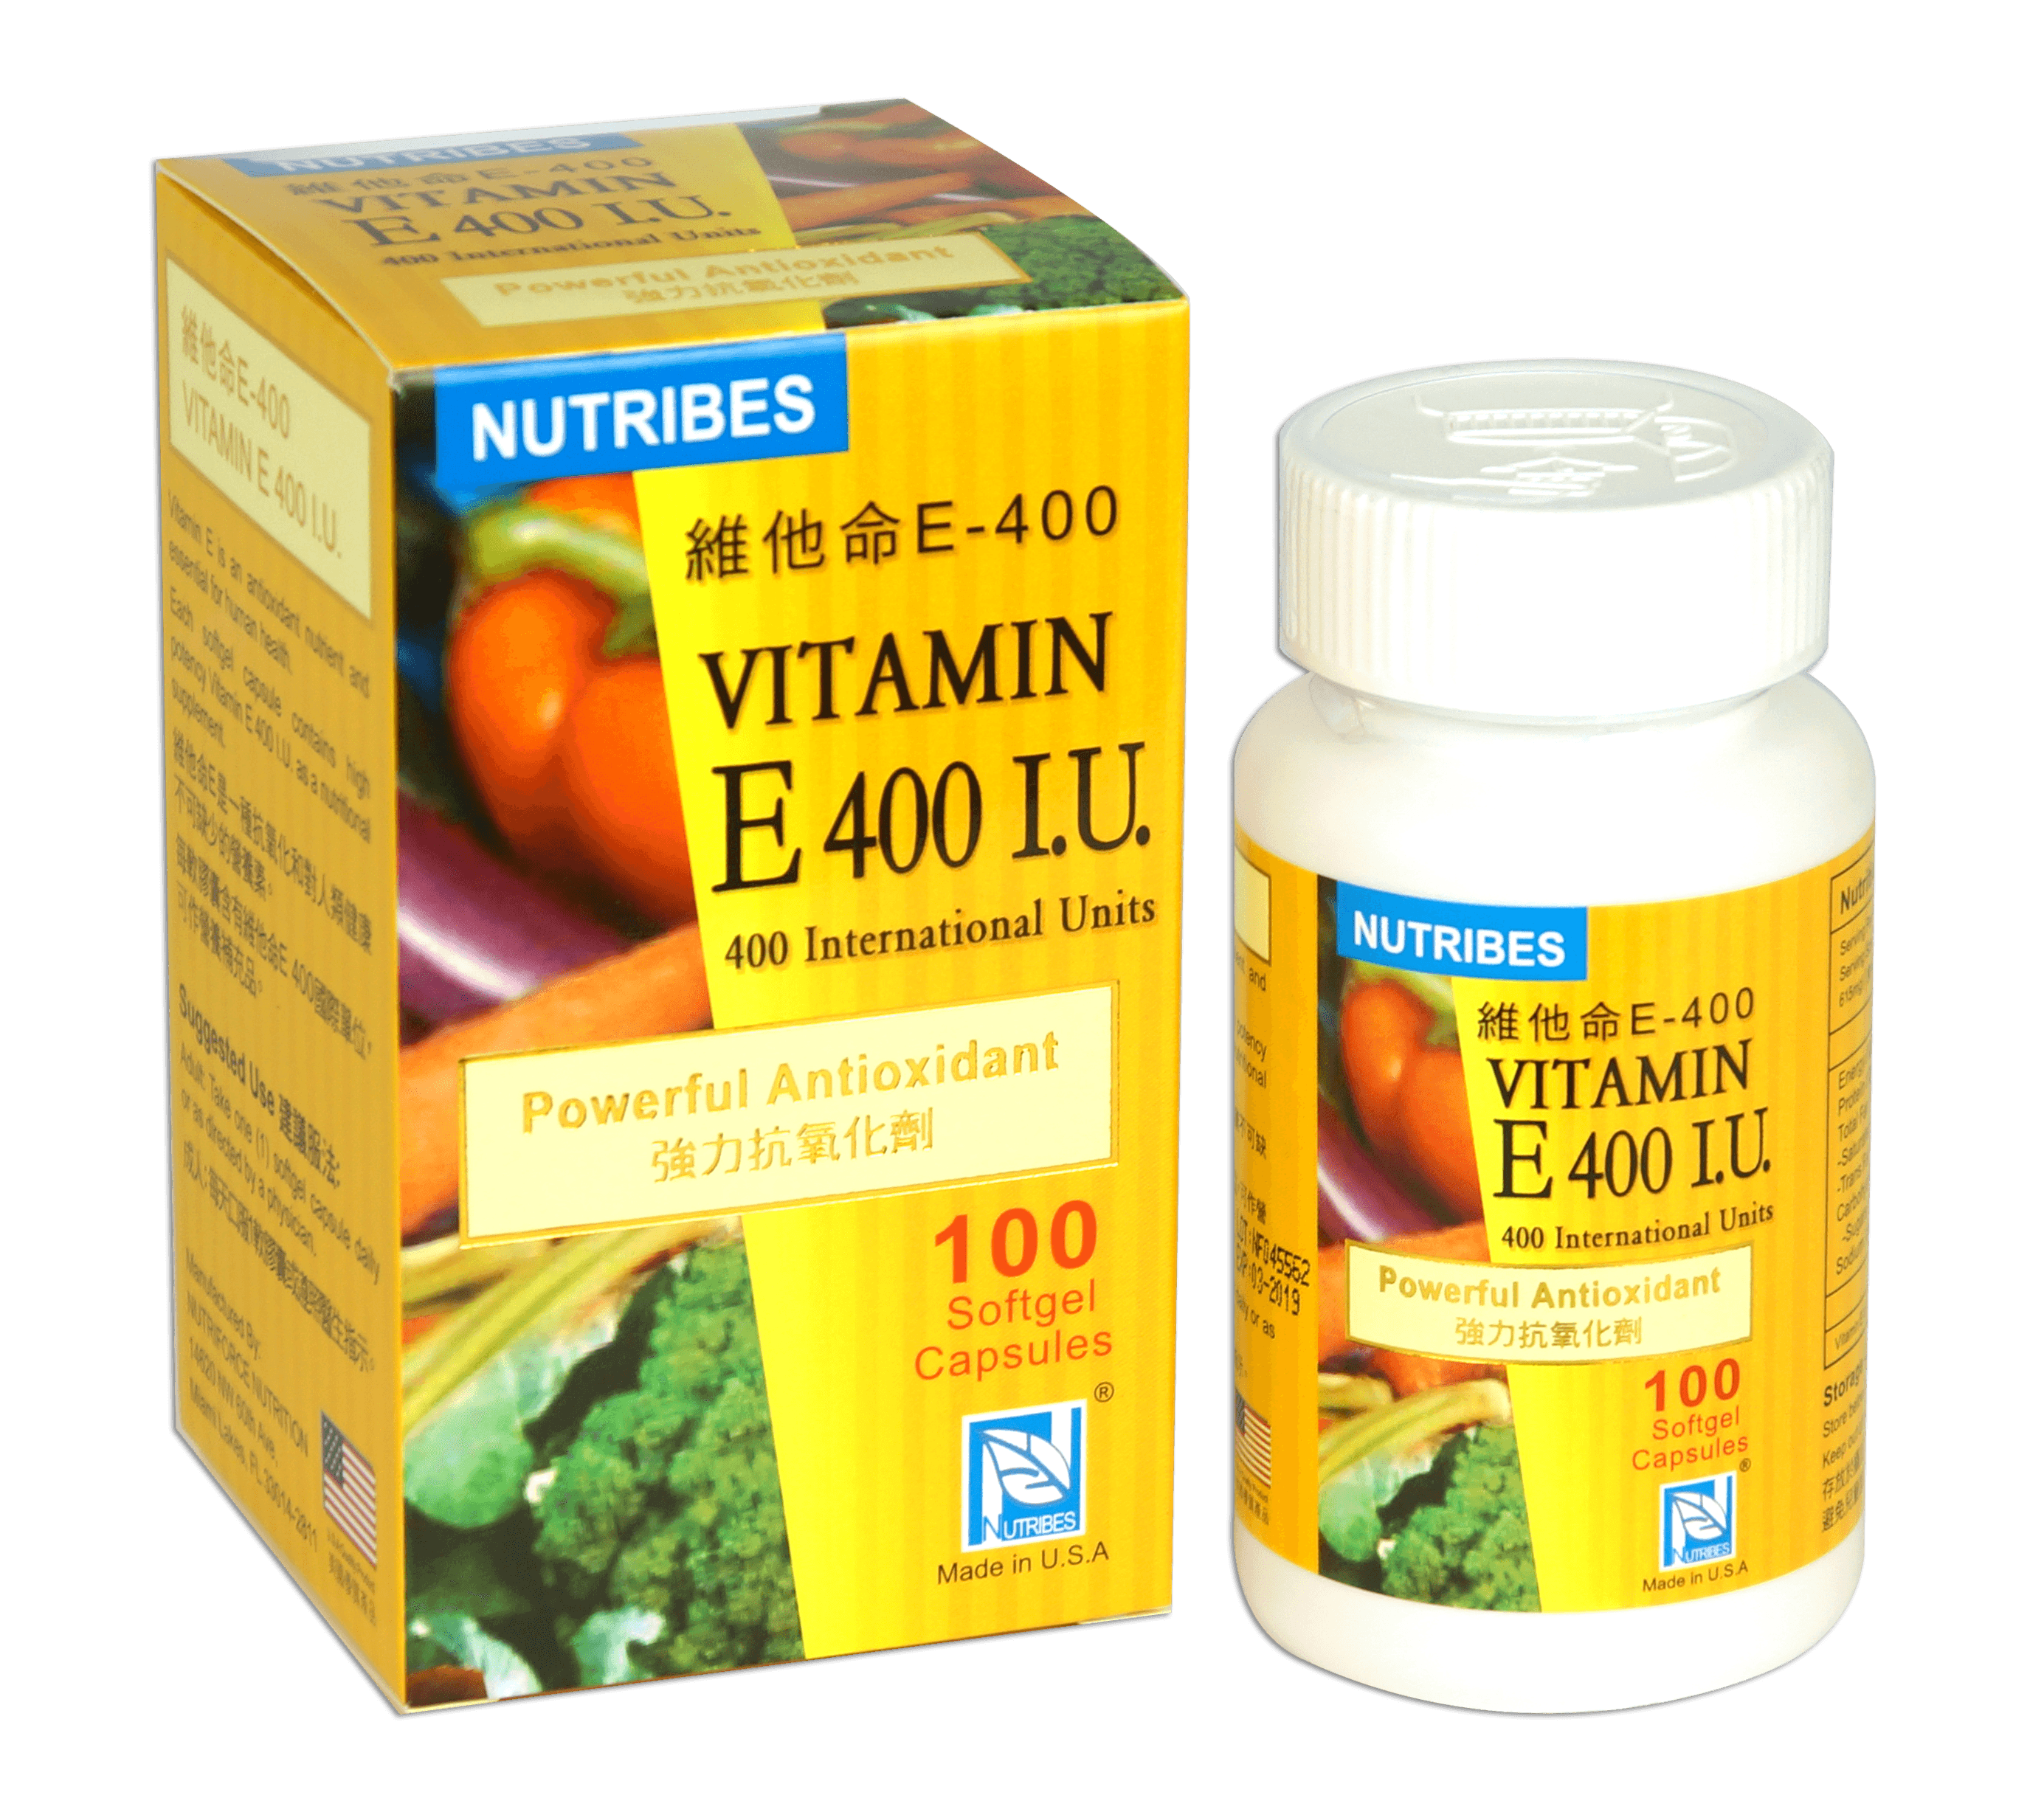 能得健維他命E-400 100's (橙） Nutribes Vitamin E 400 I.U. 100's (Orange)